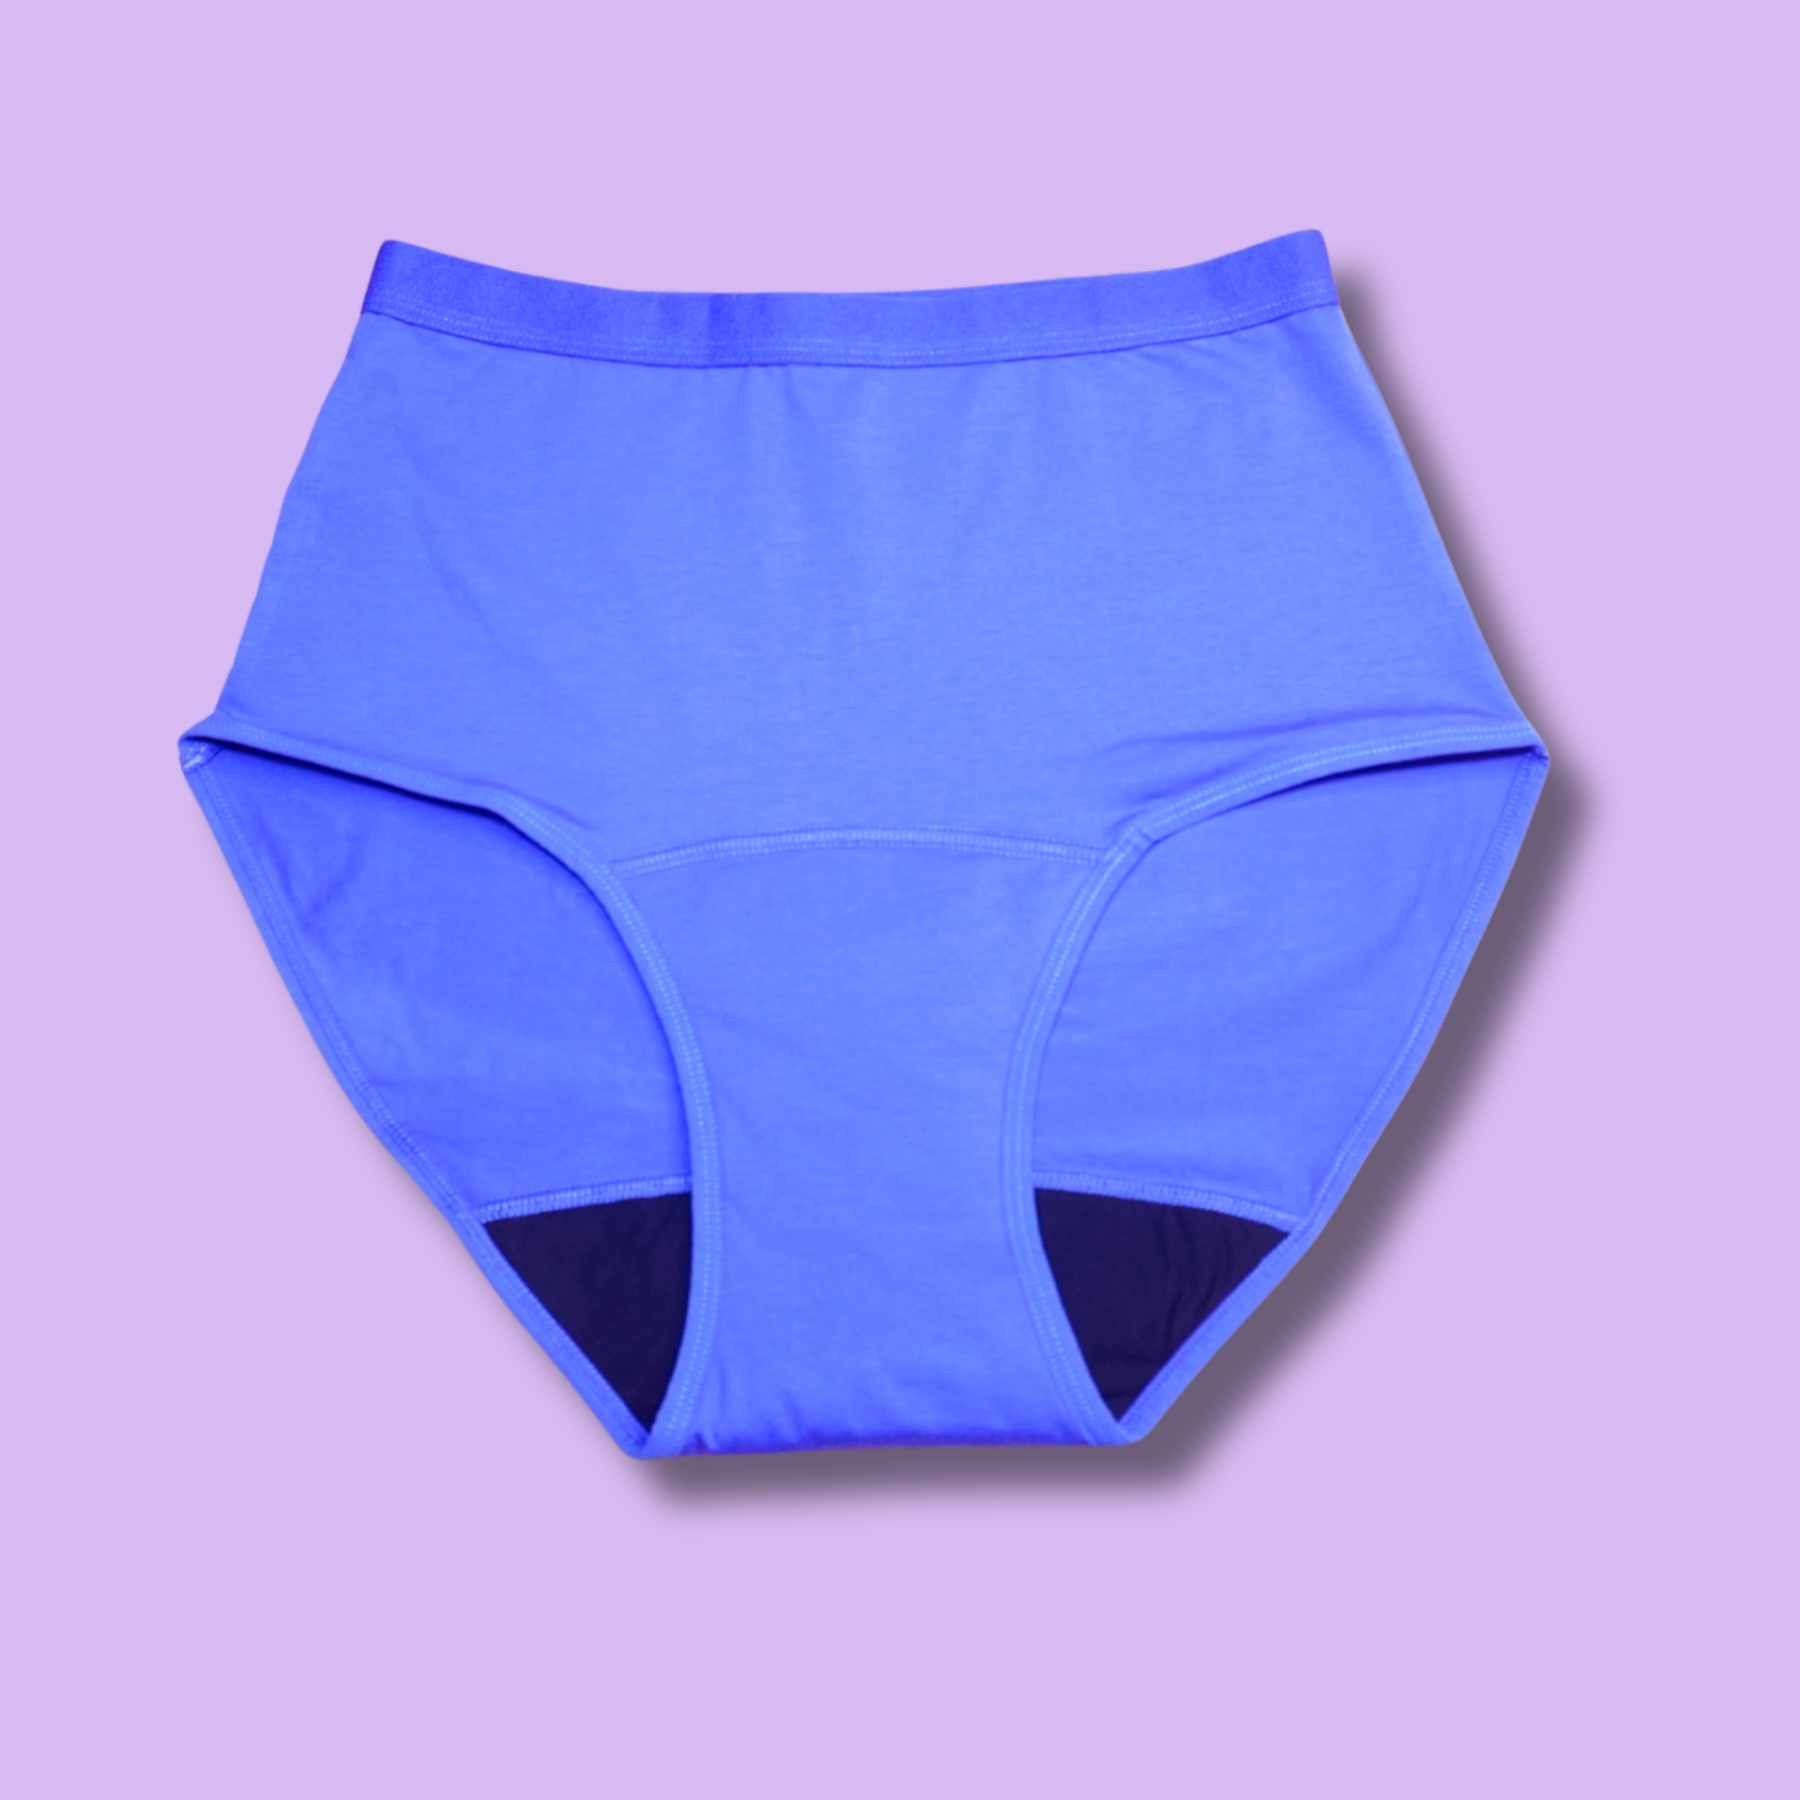 Buy Free Lily Eco Friendly,reusable Women Menstrual Underwear